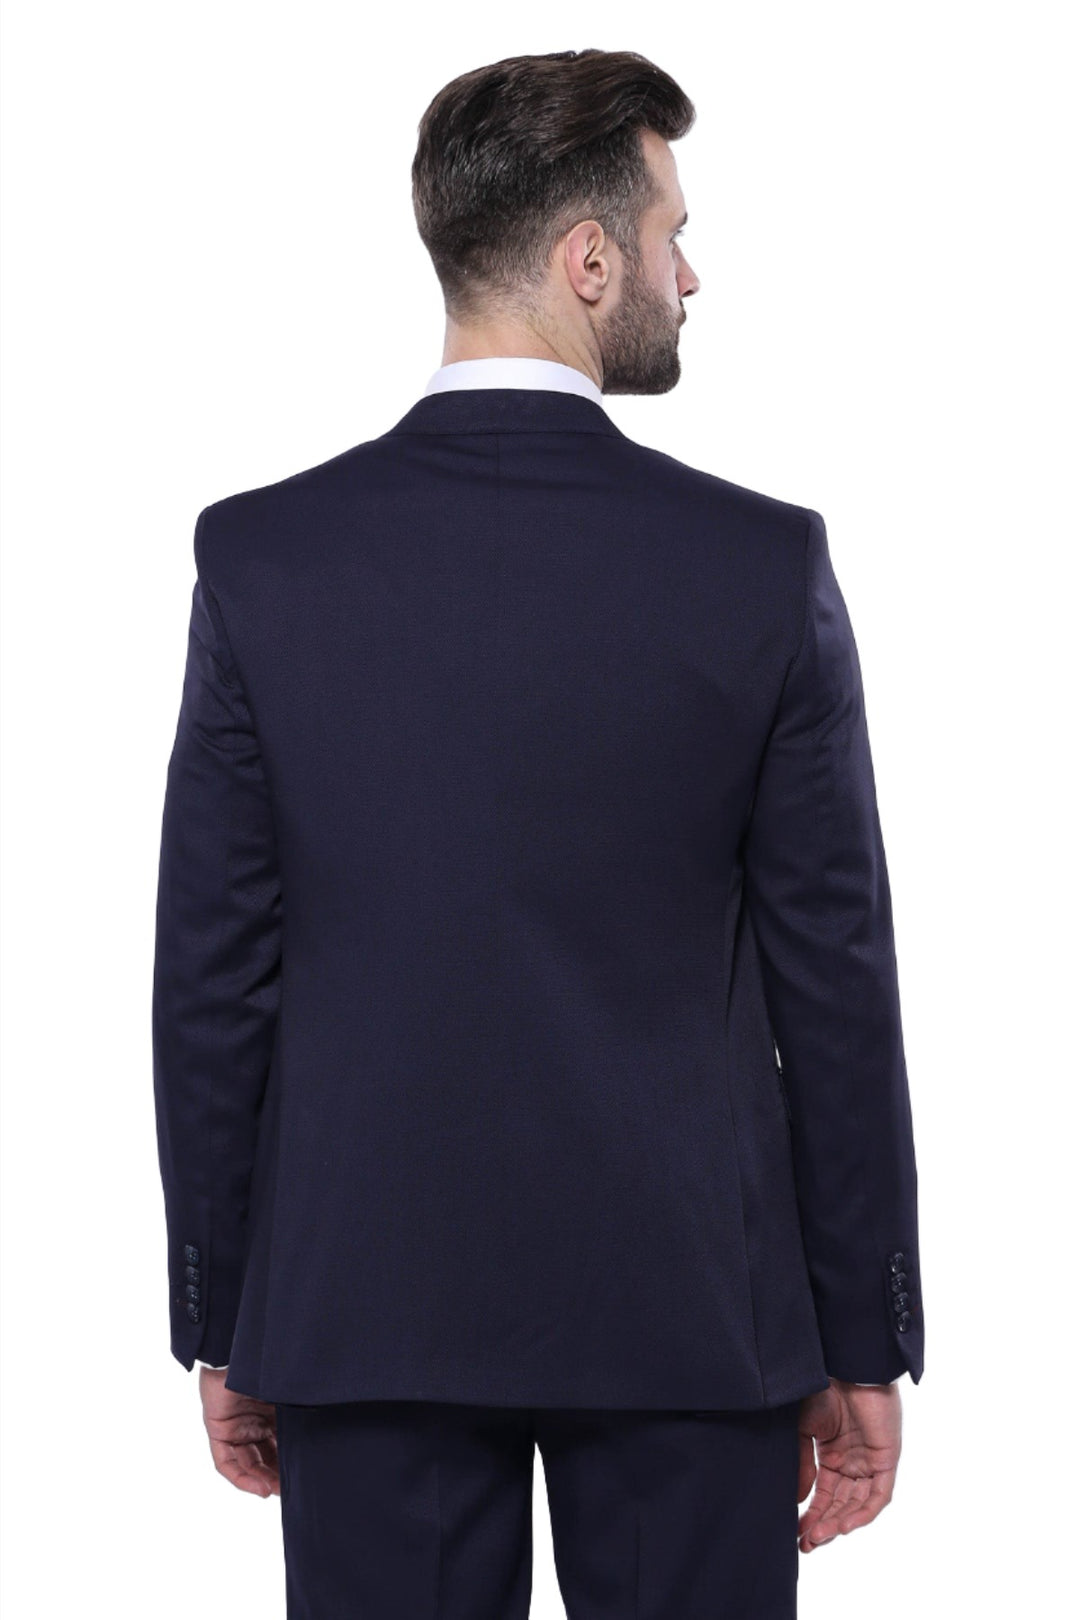 Patterned Navy Blue Vested Suit | Wessi